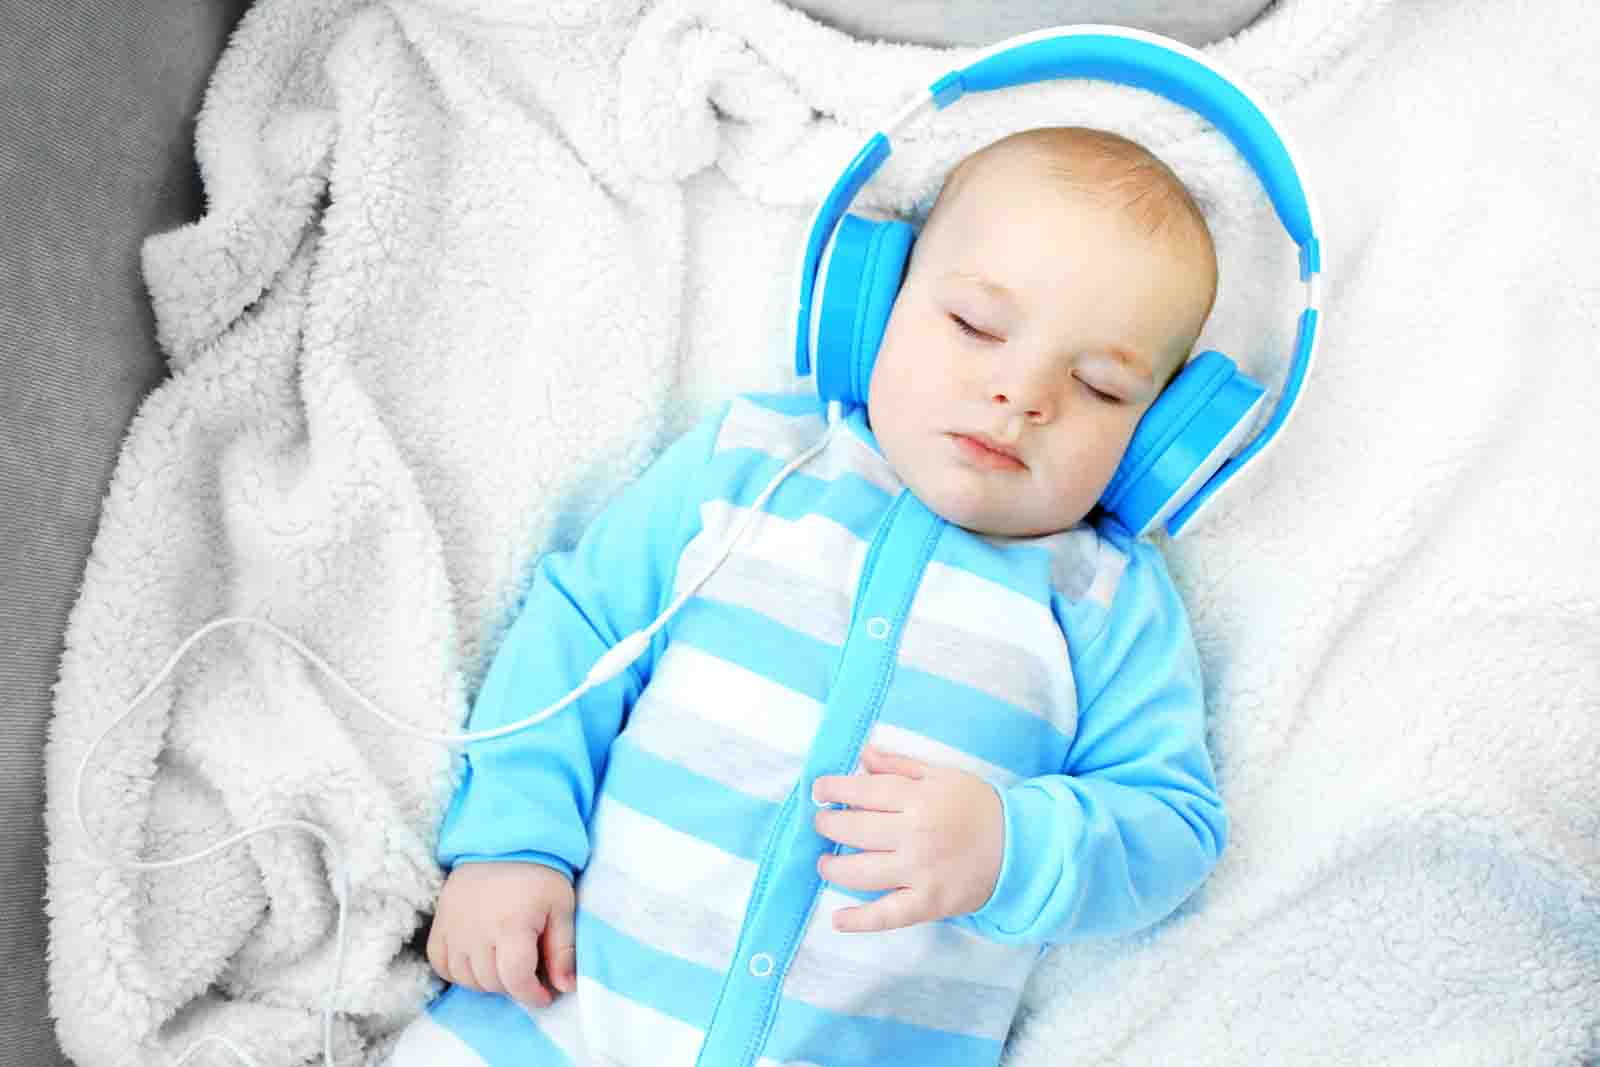 Mozart for Babies How Music Benefits Child Development